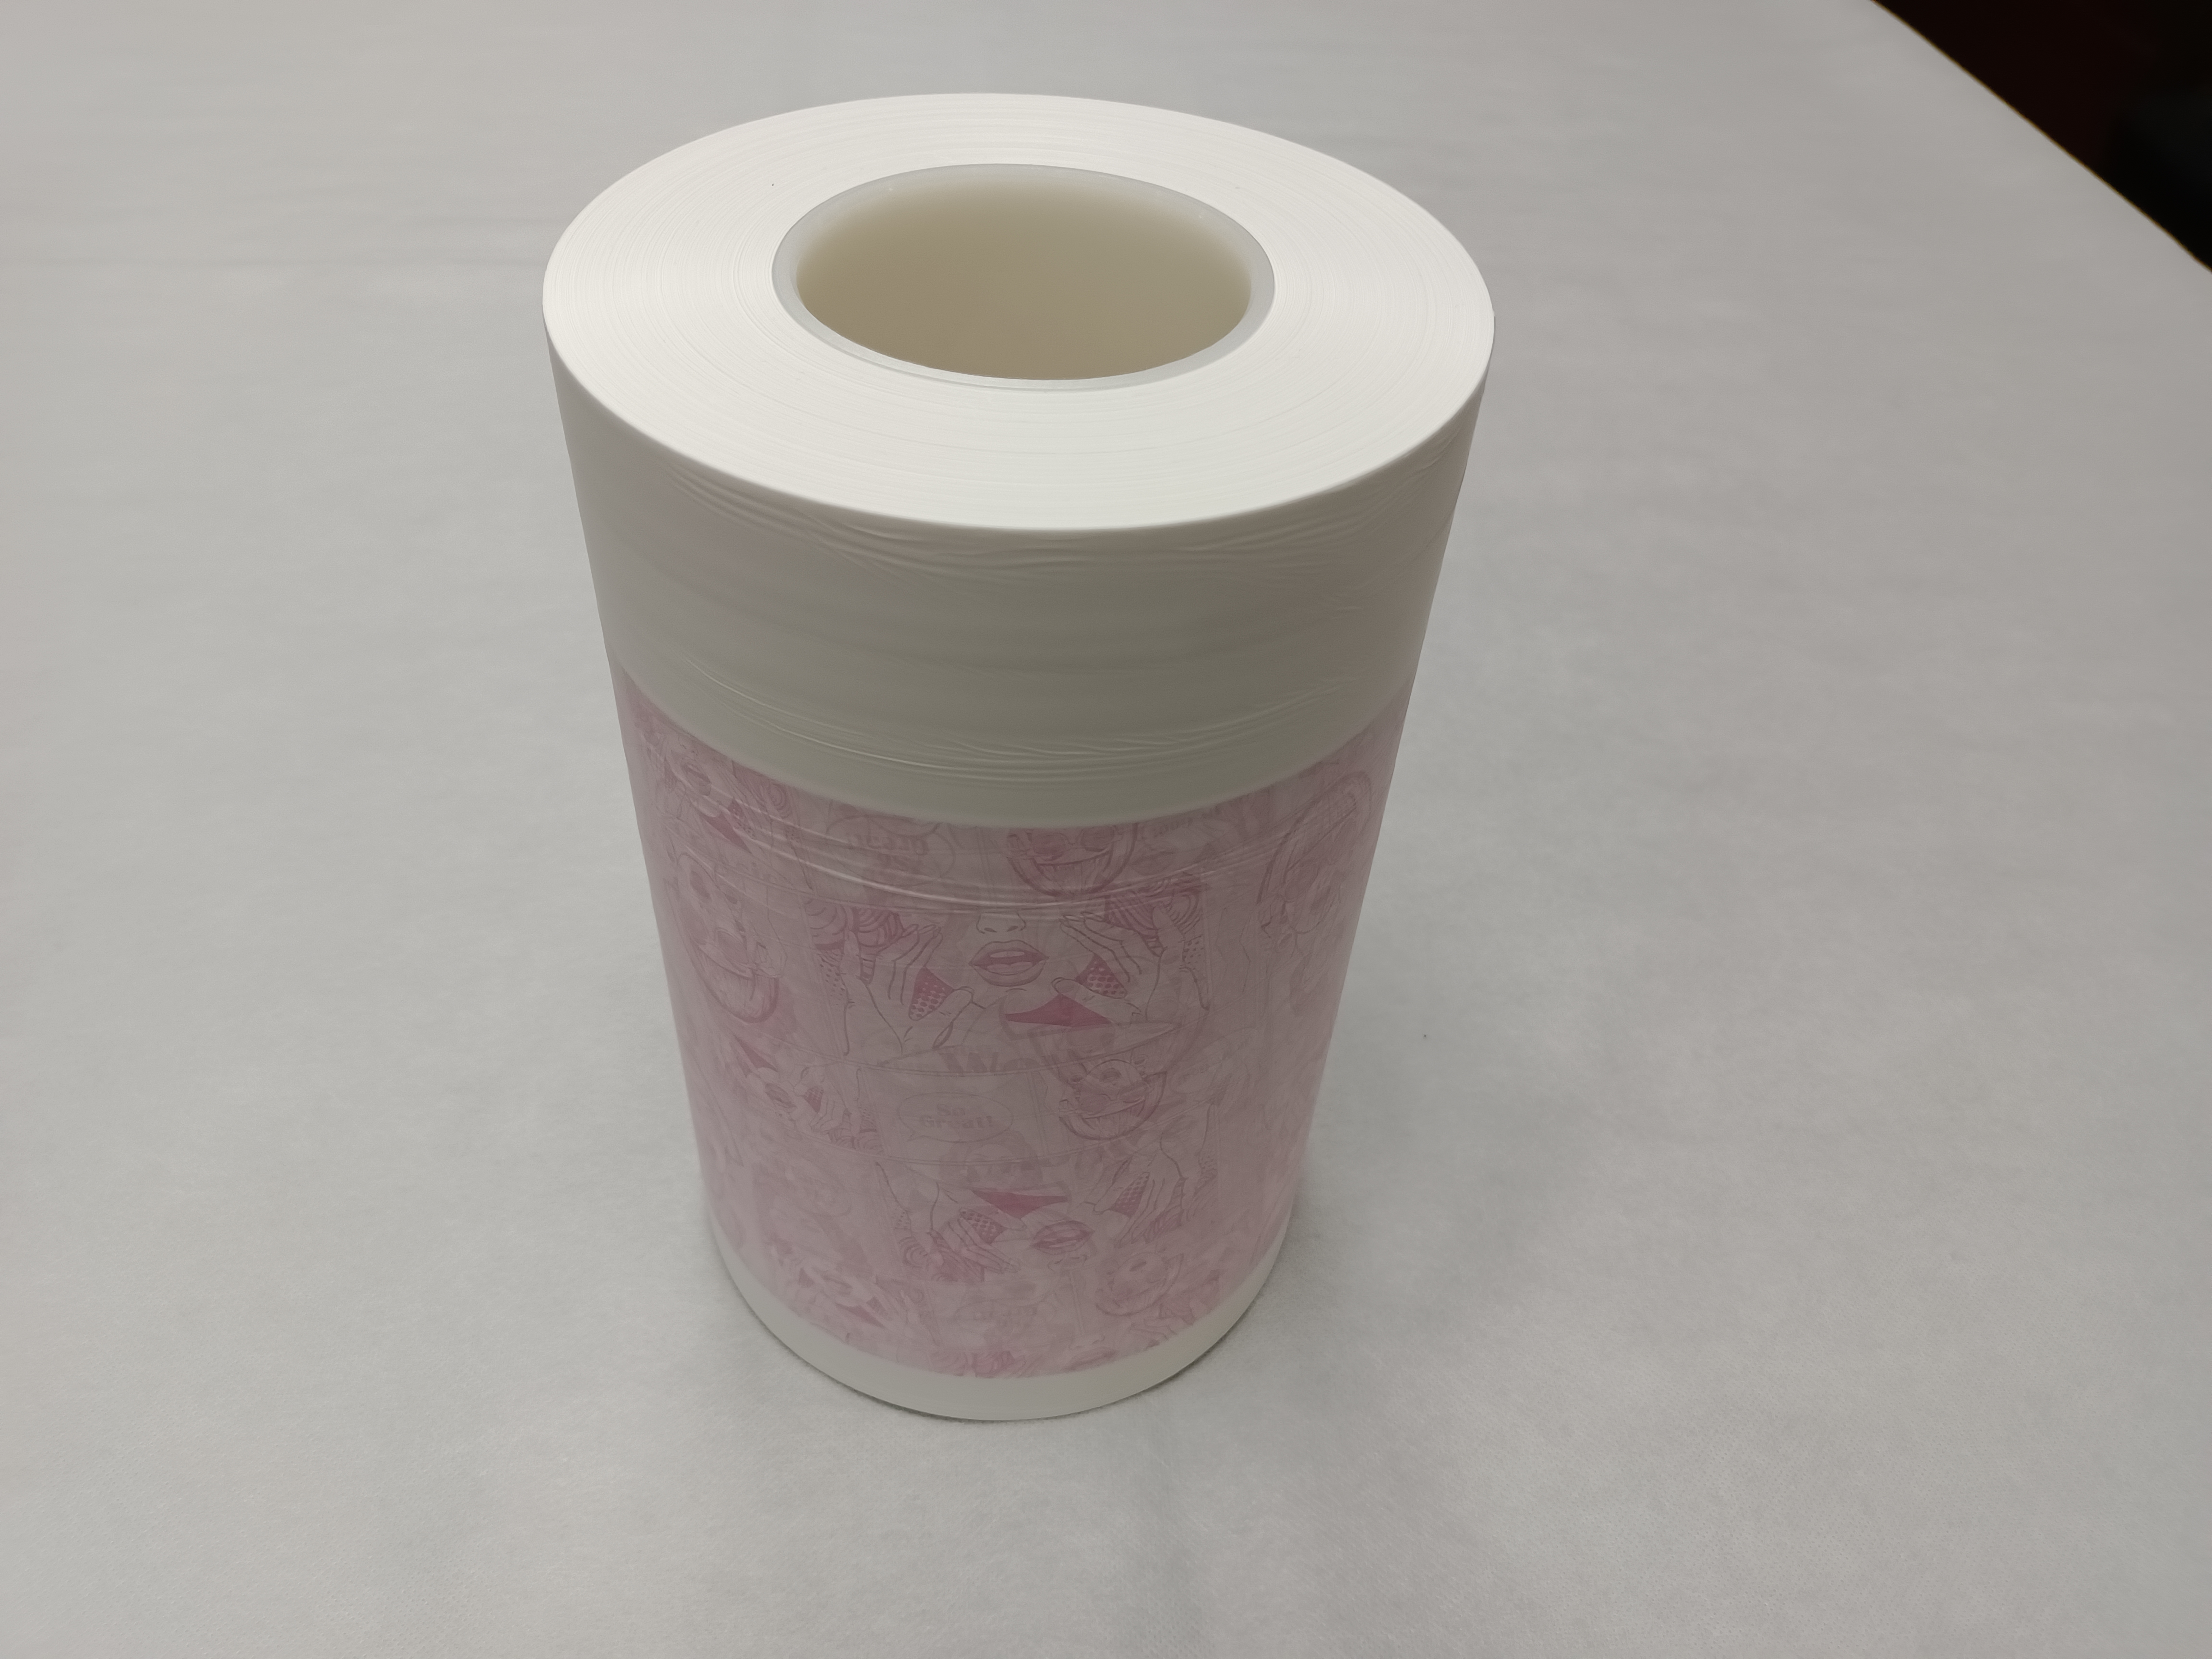 PE Film wrapper for sanitary napkin